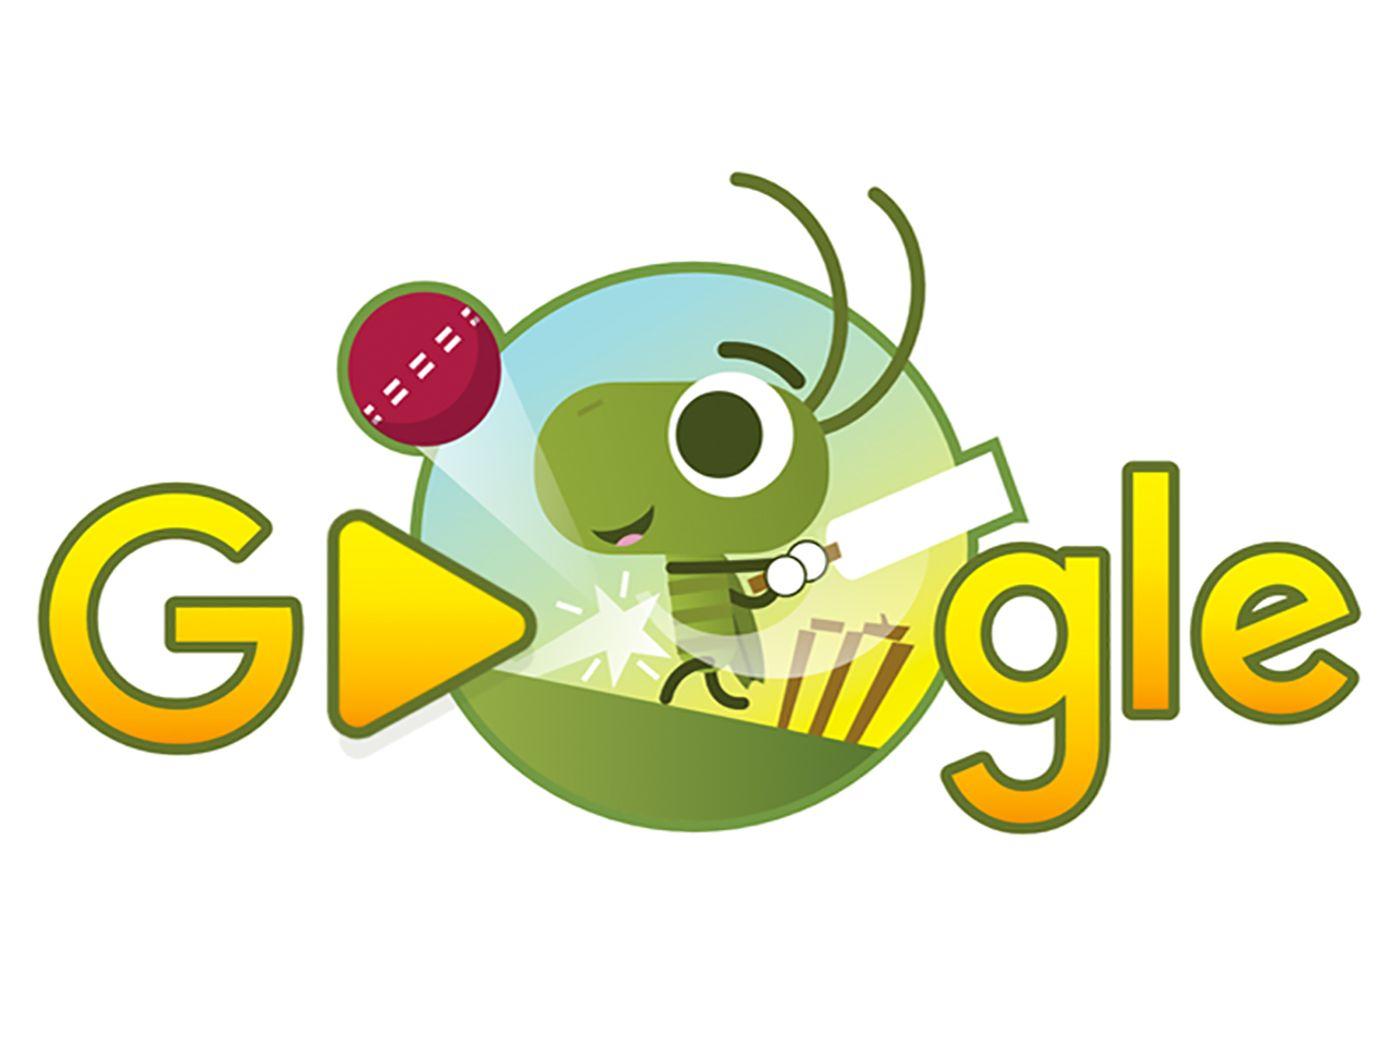 Best Google Logo - Google Doodle Cricket Game Marks ICC Women's World Cup